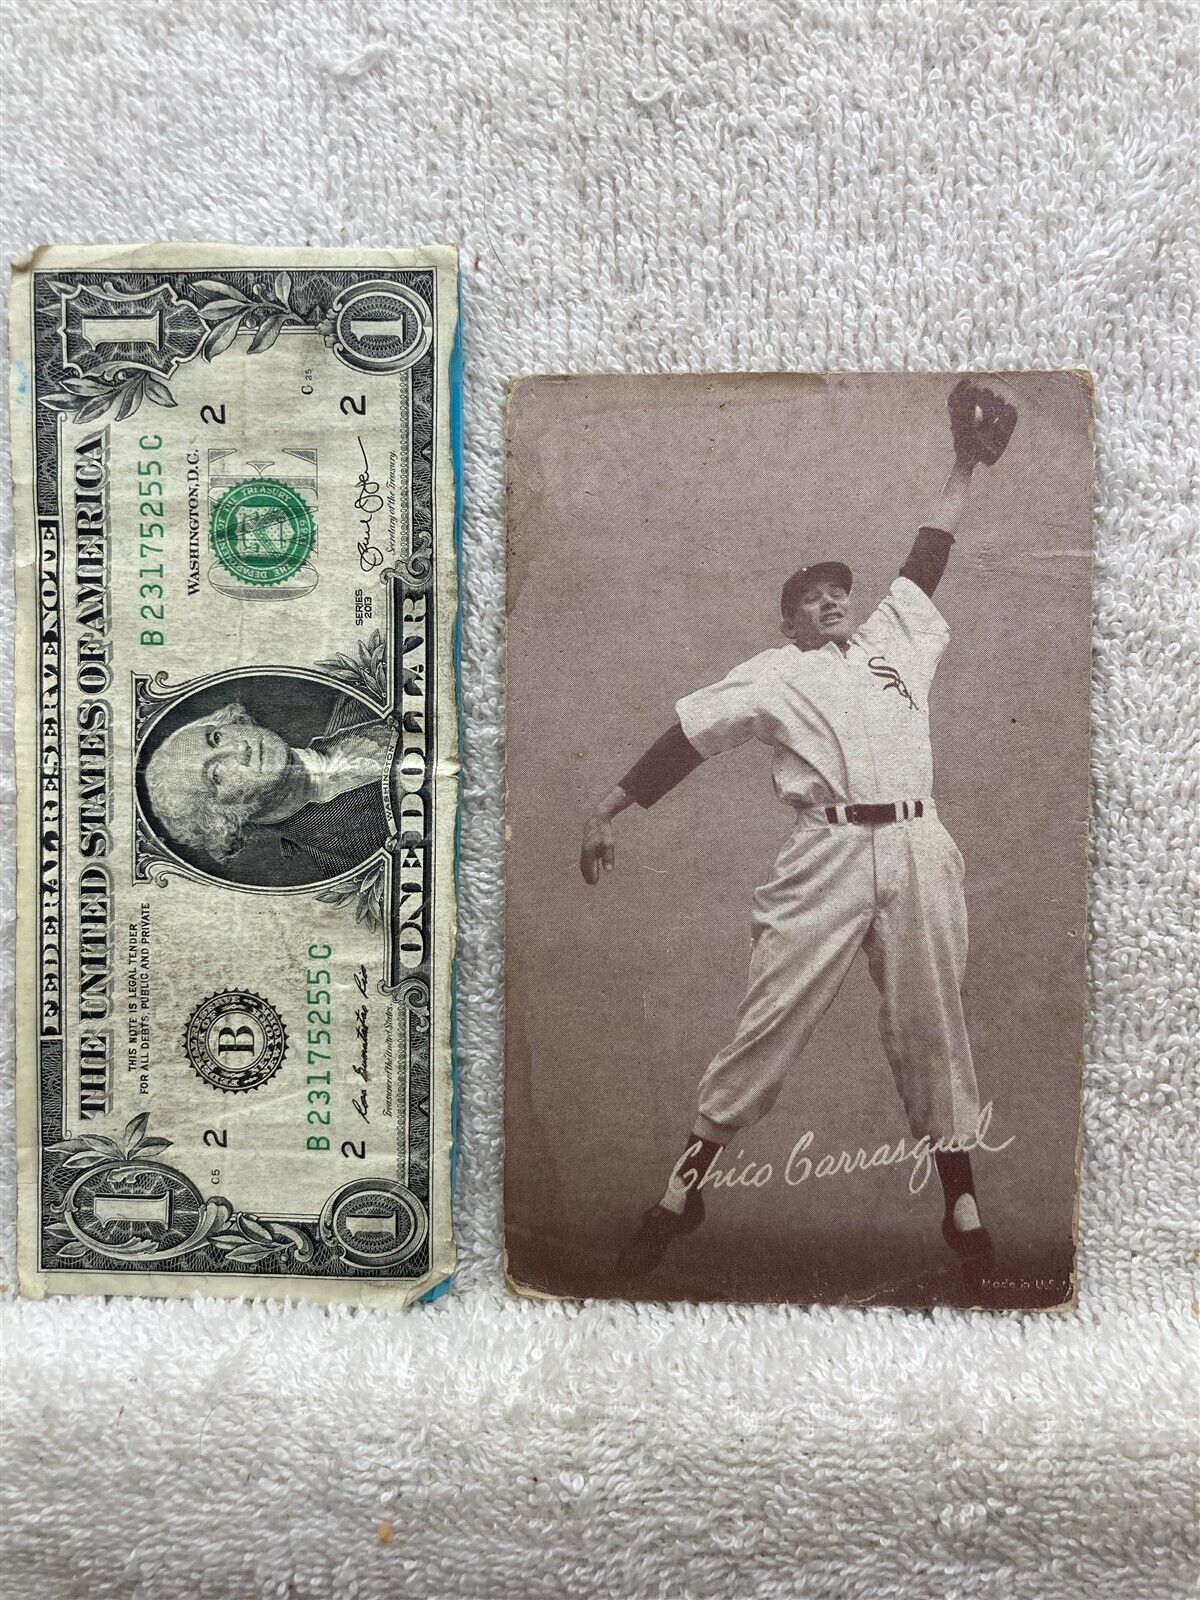 1947-1966 Baseball Exhibit Card, Chico Carrasquel, Chicago White Sox, Jumping